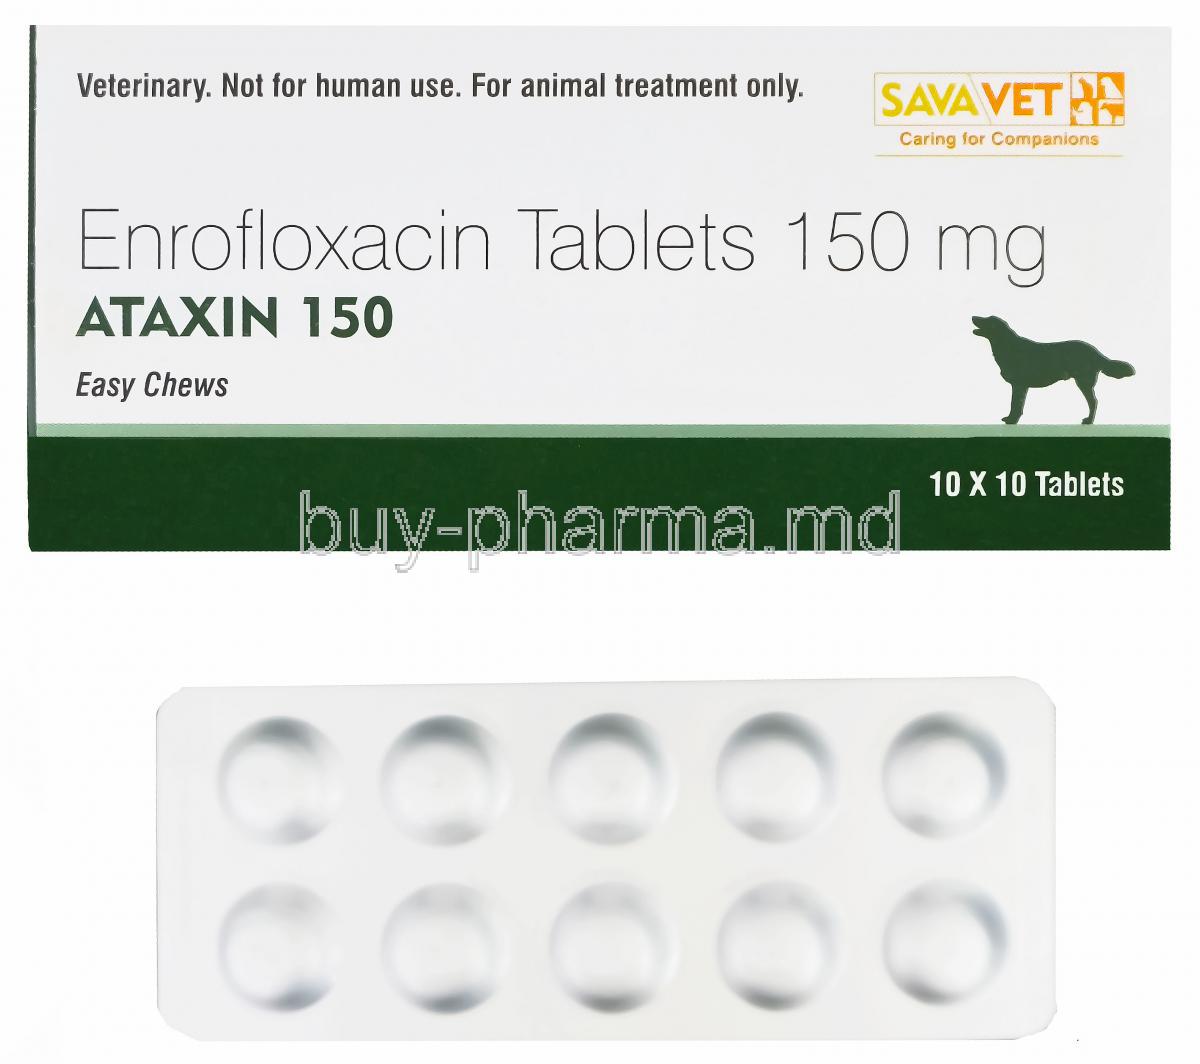 Ataxin 150, Generic Baytril, Enrofloxacin 150mg Easy Chews